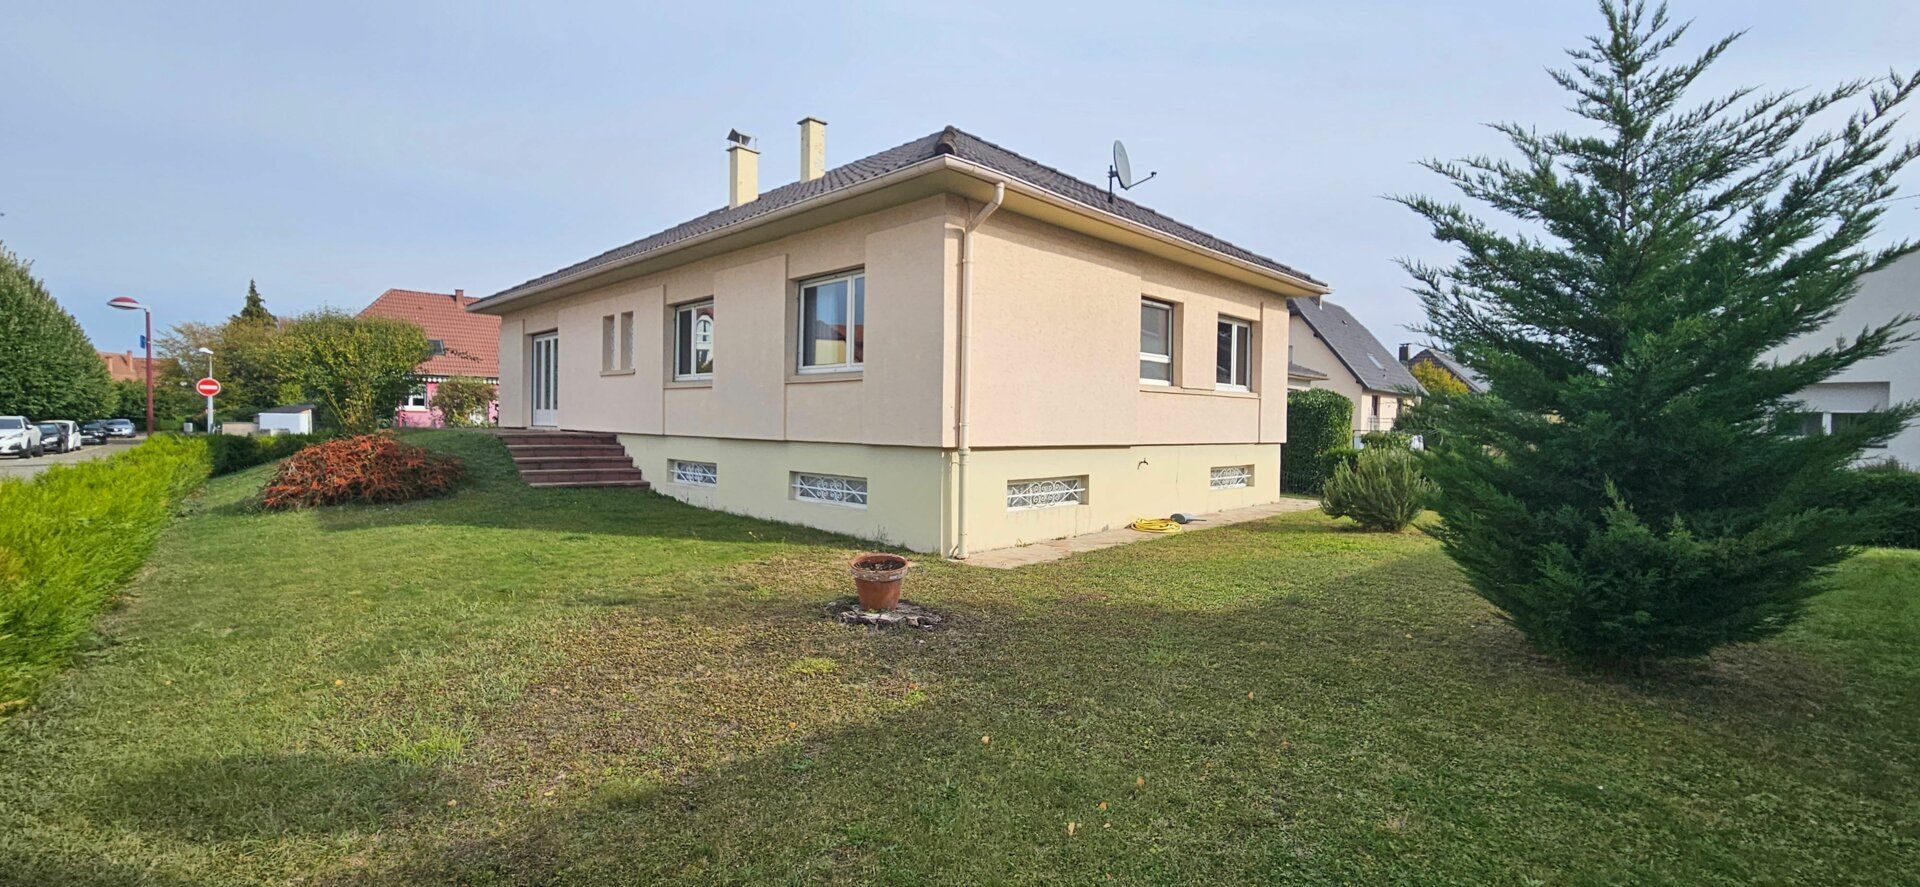 Maison à vendre 4 132m2 à Souffelweyersheim vignette-2